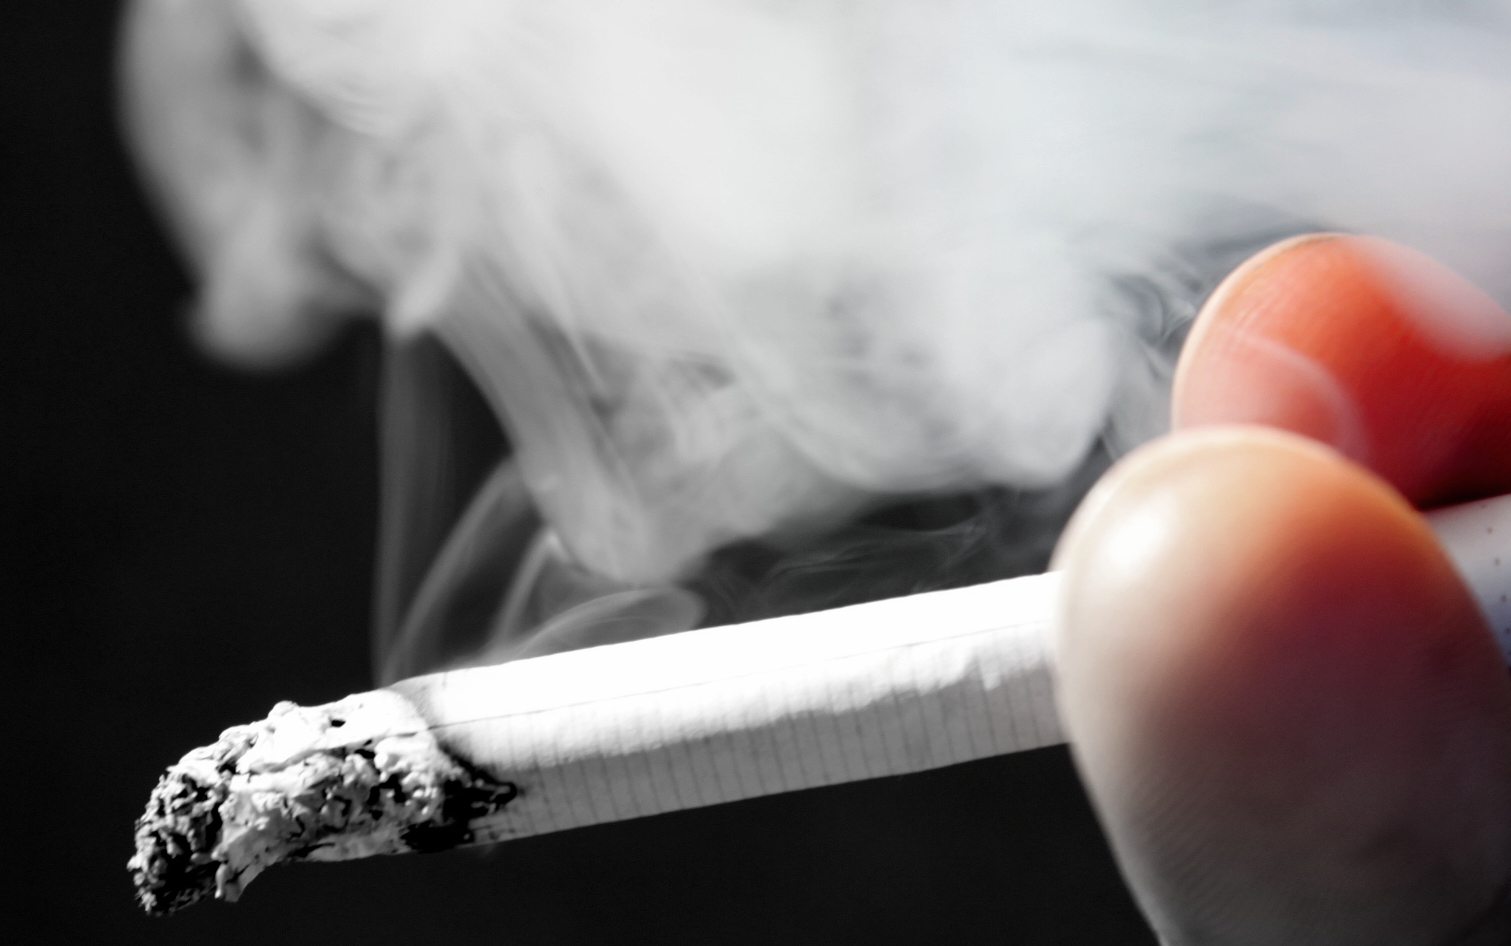 Smoking permanently mutates your genes, new study